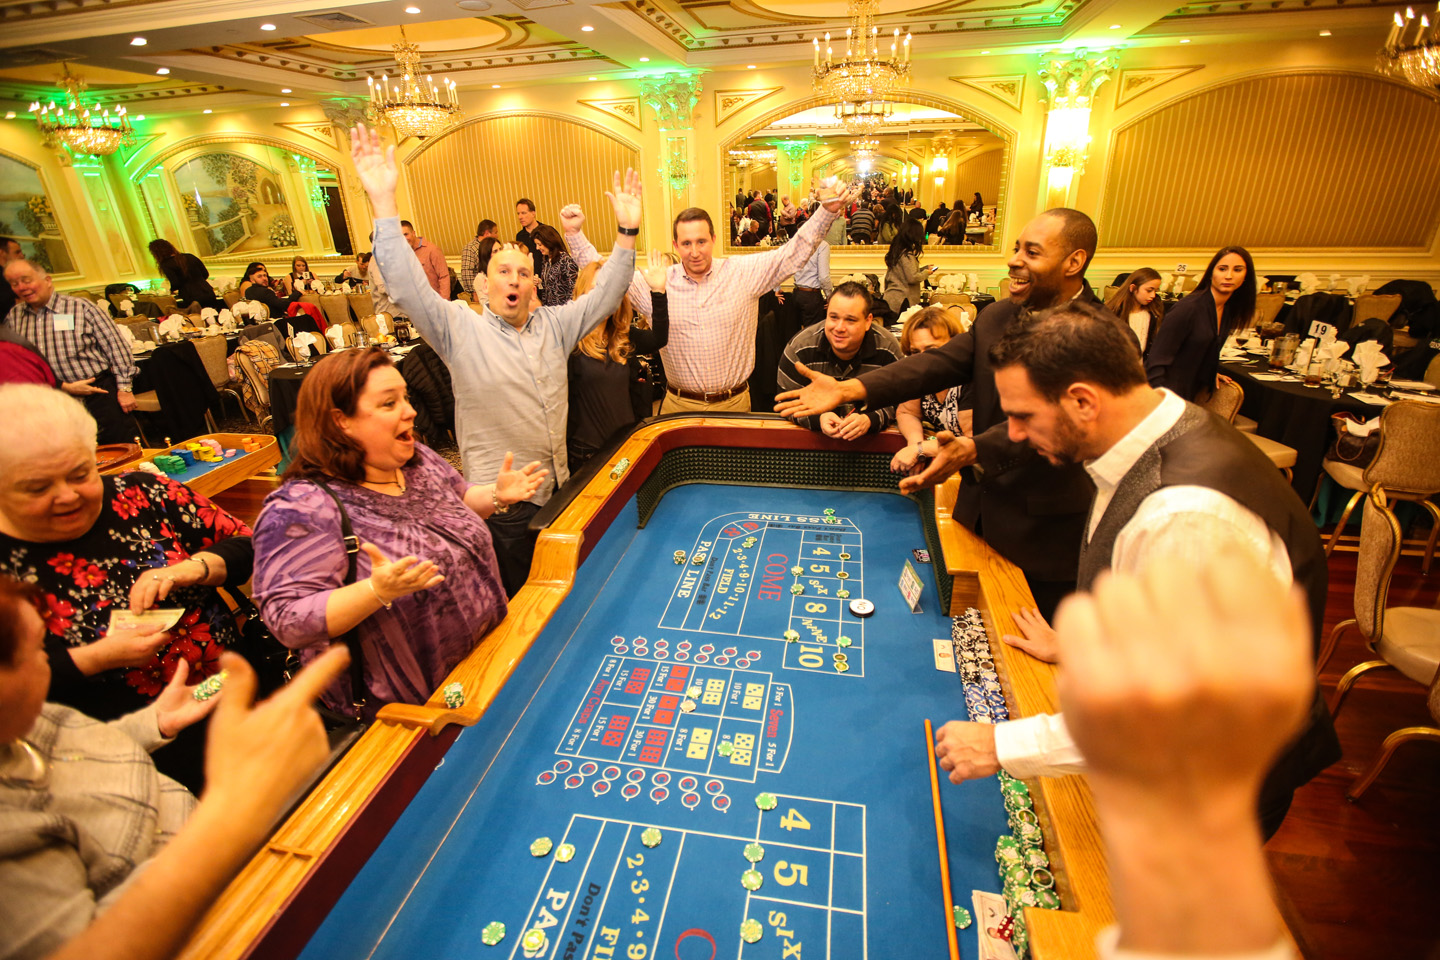 rental party casino games montclair